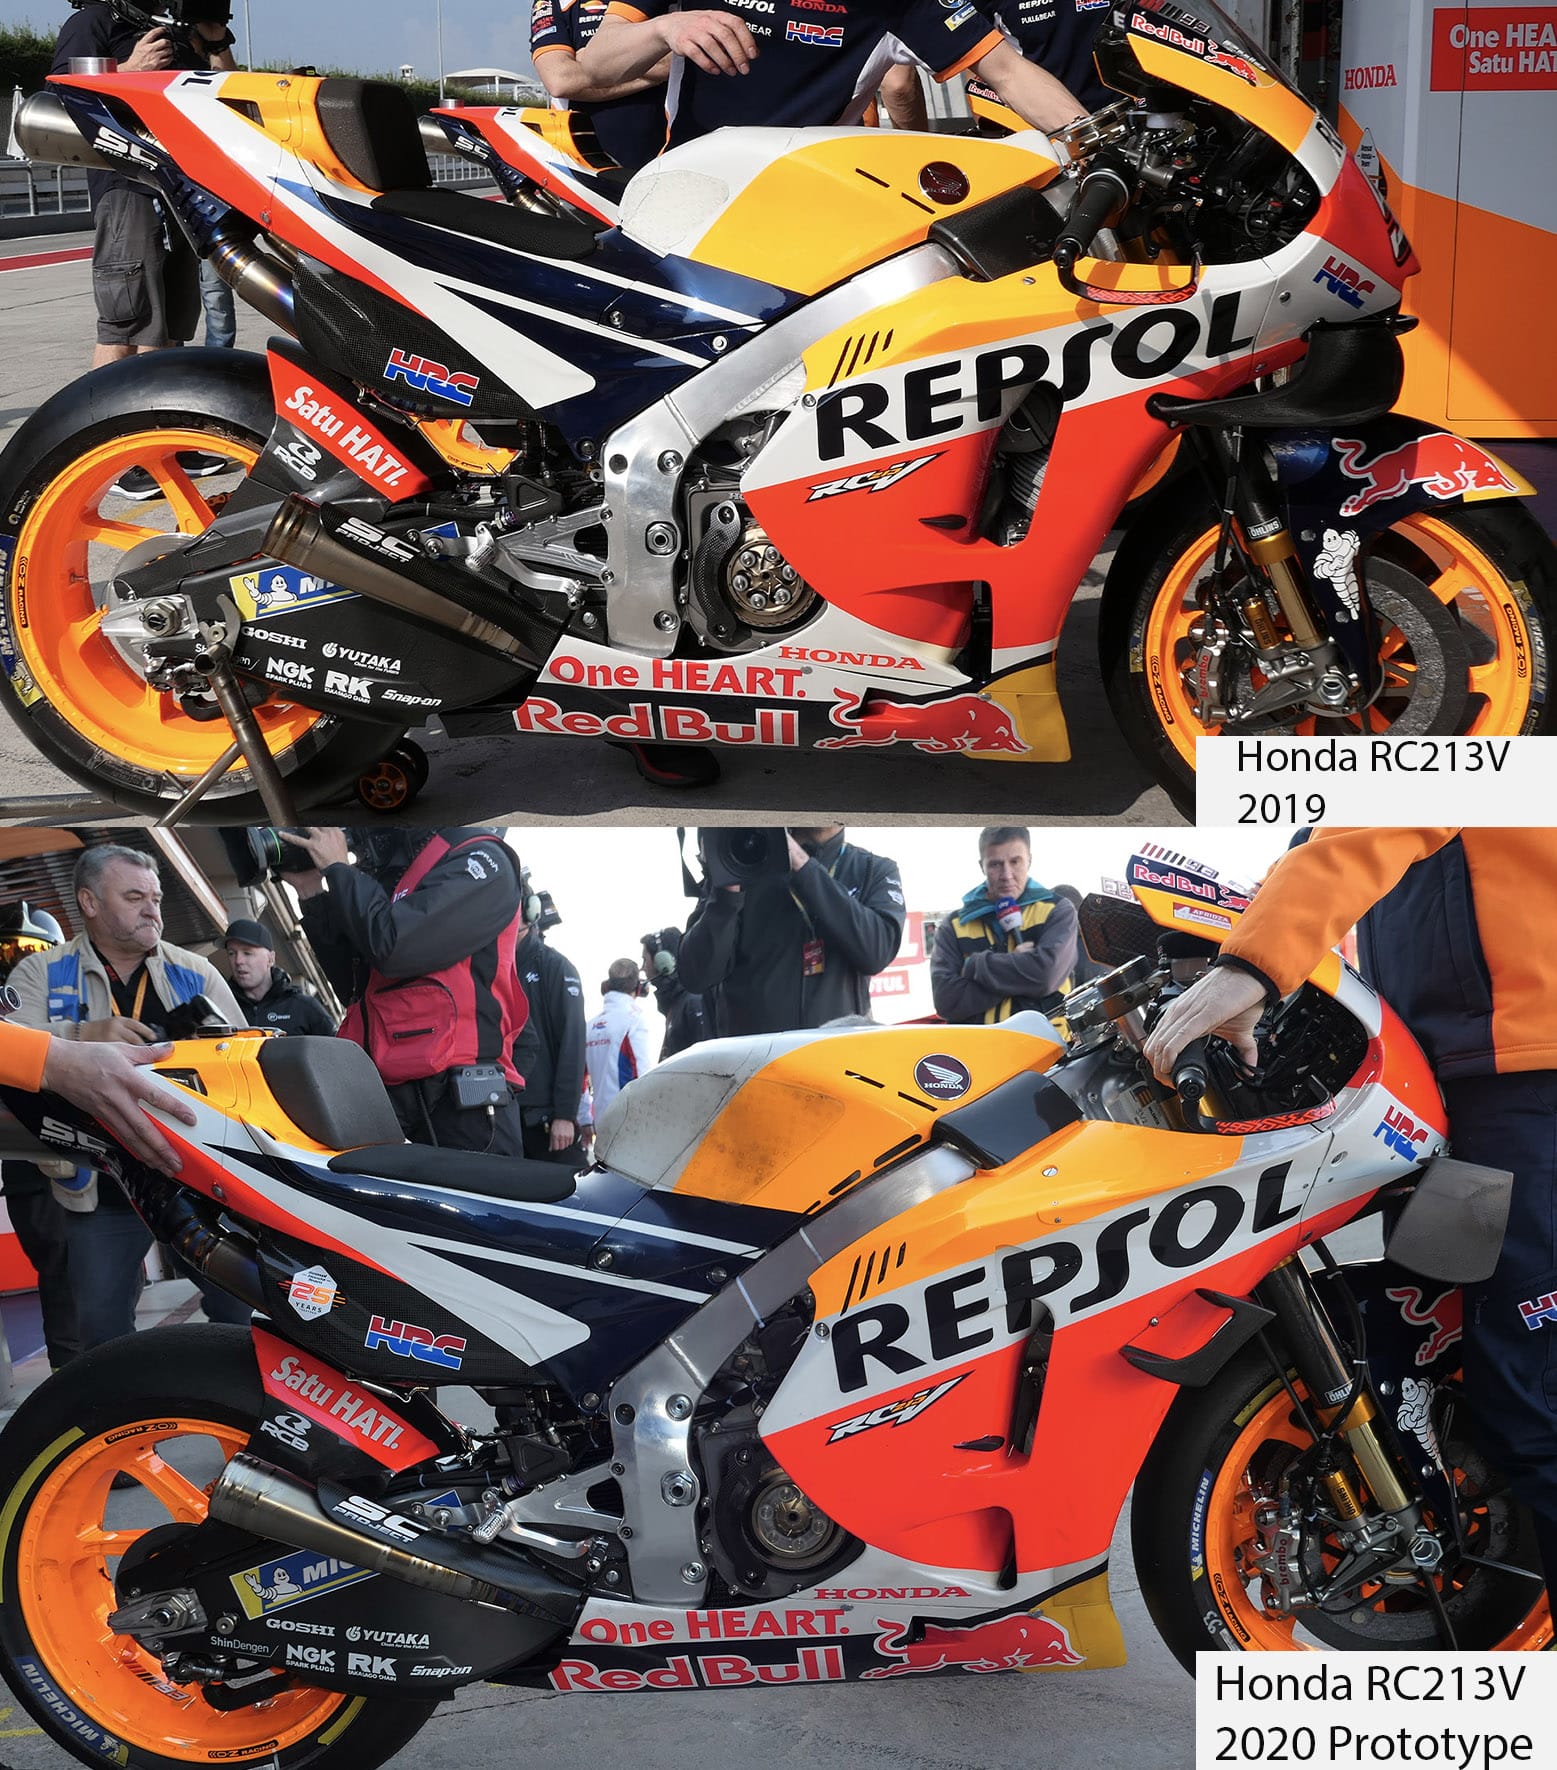 Honda's RC213V 2019 and 2020 prototype bikes during post-season testing